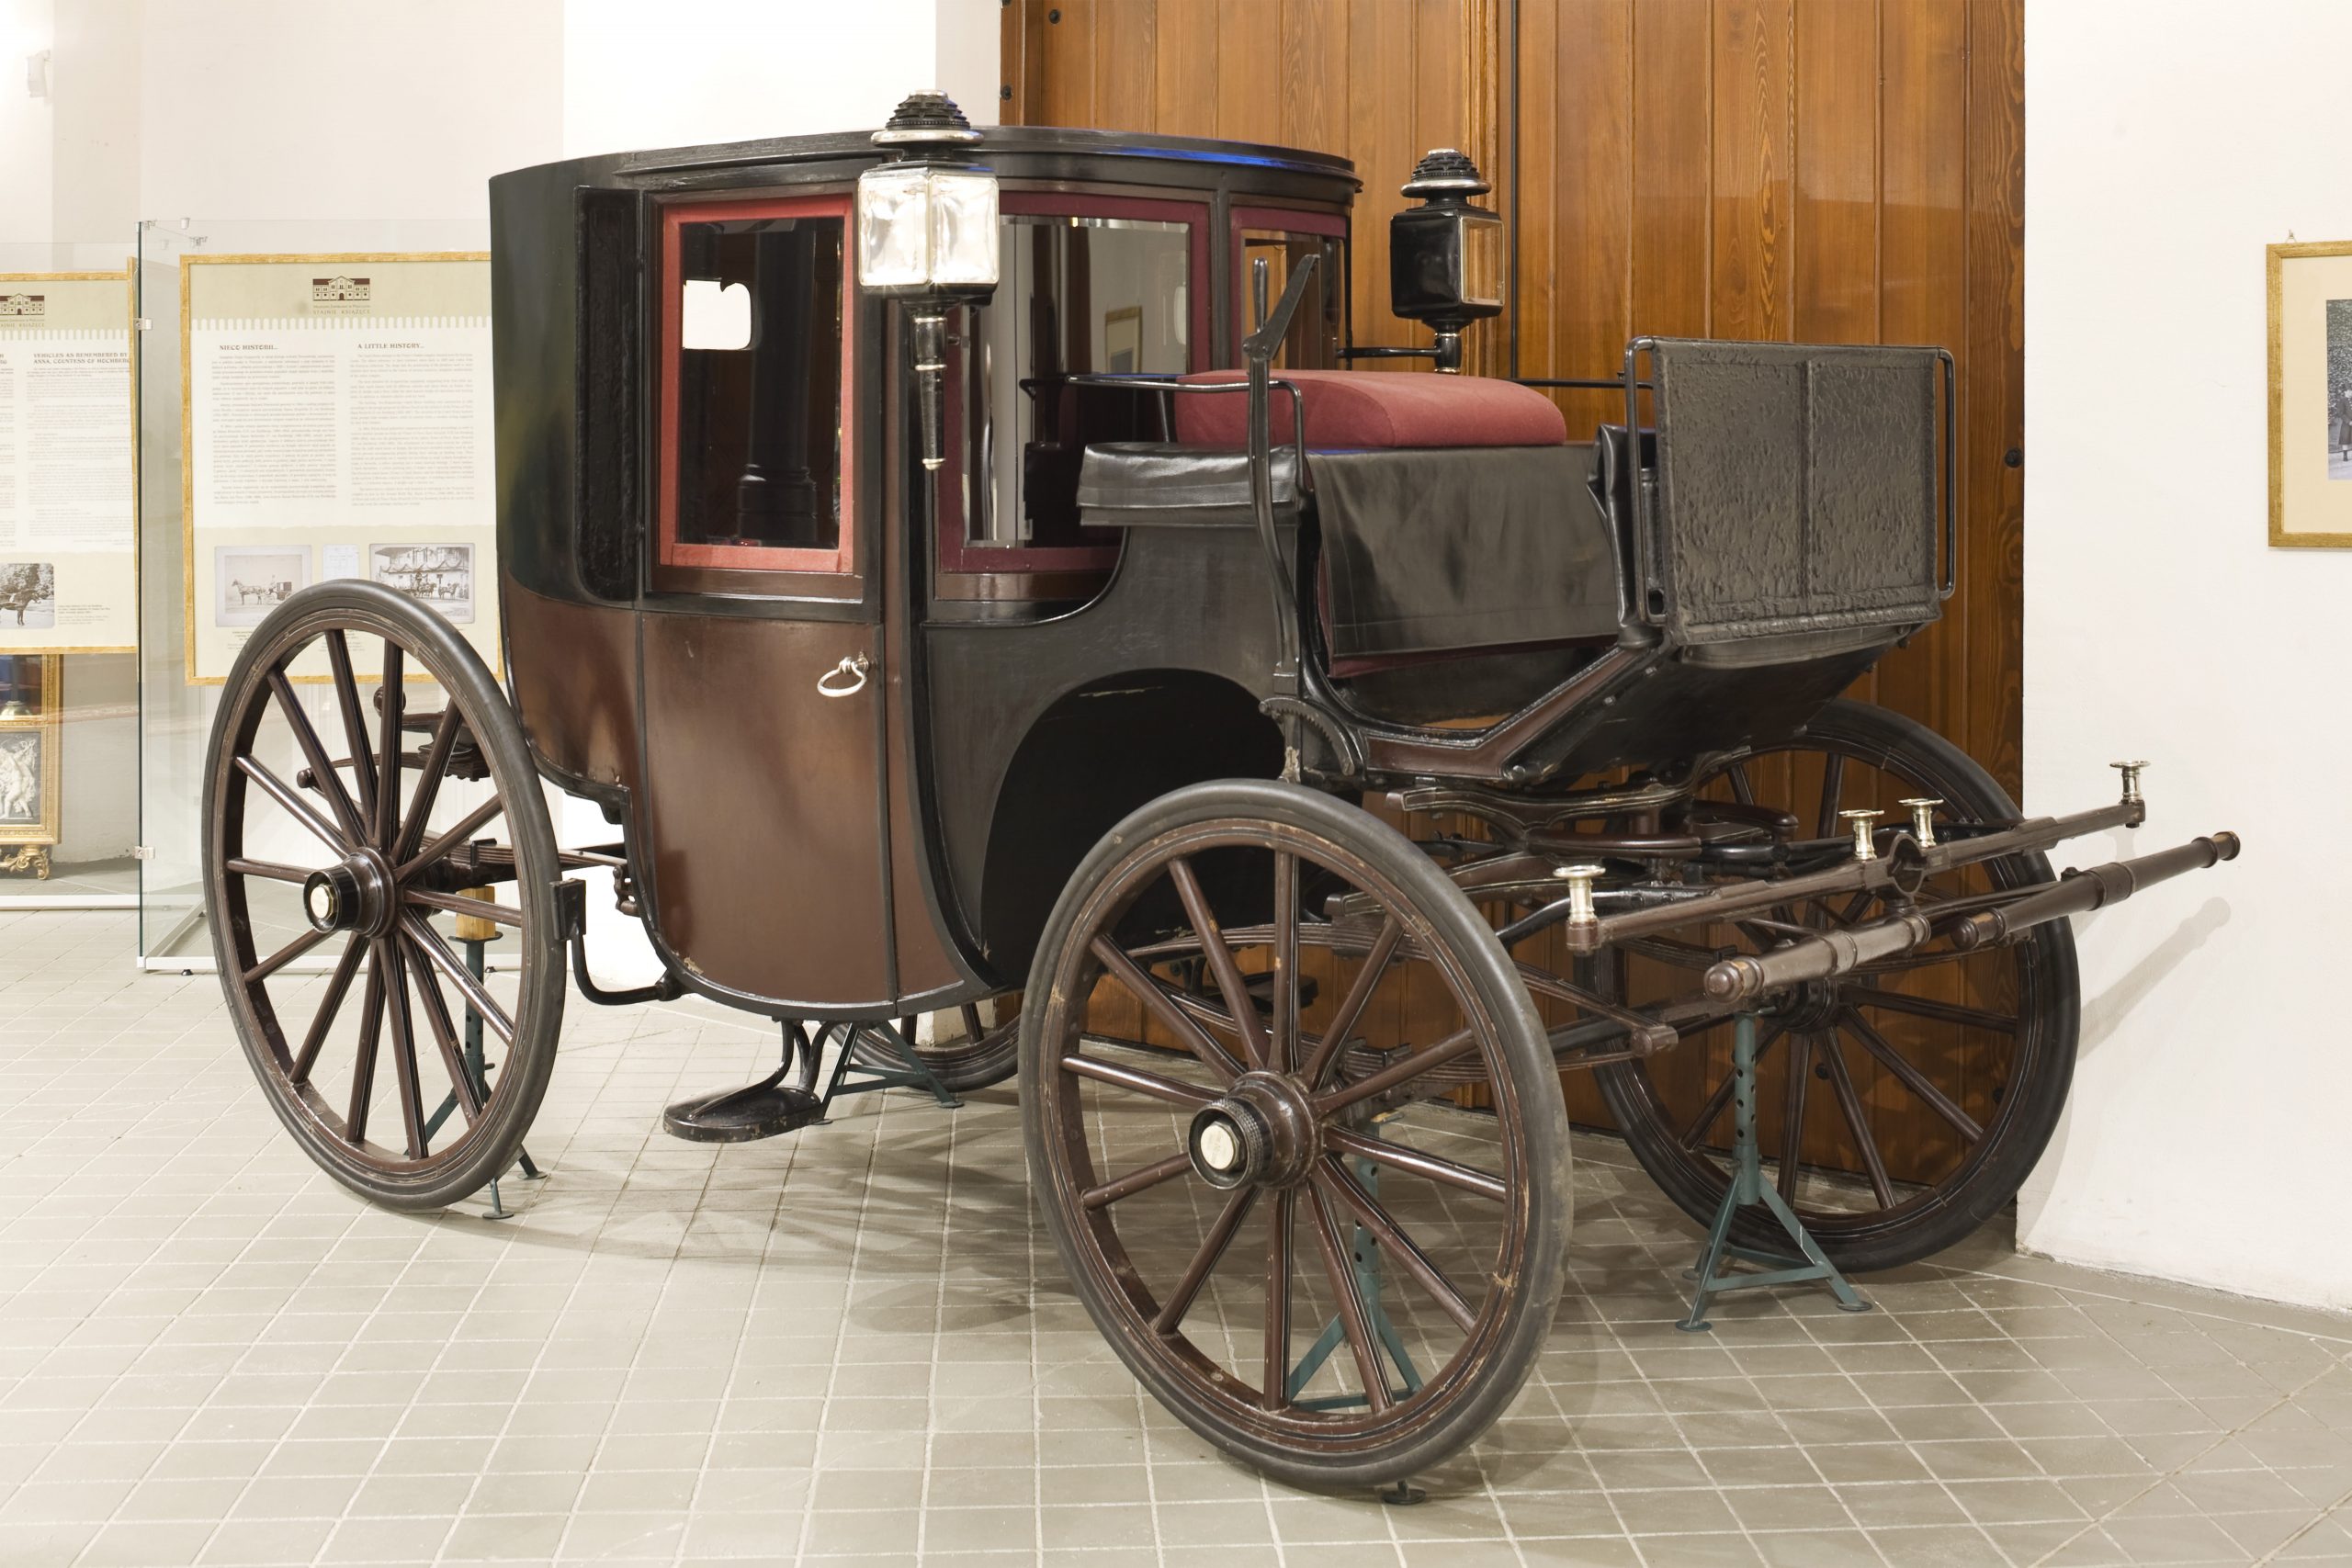 Premanent of historic horse-drawn vehicles